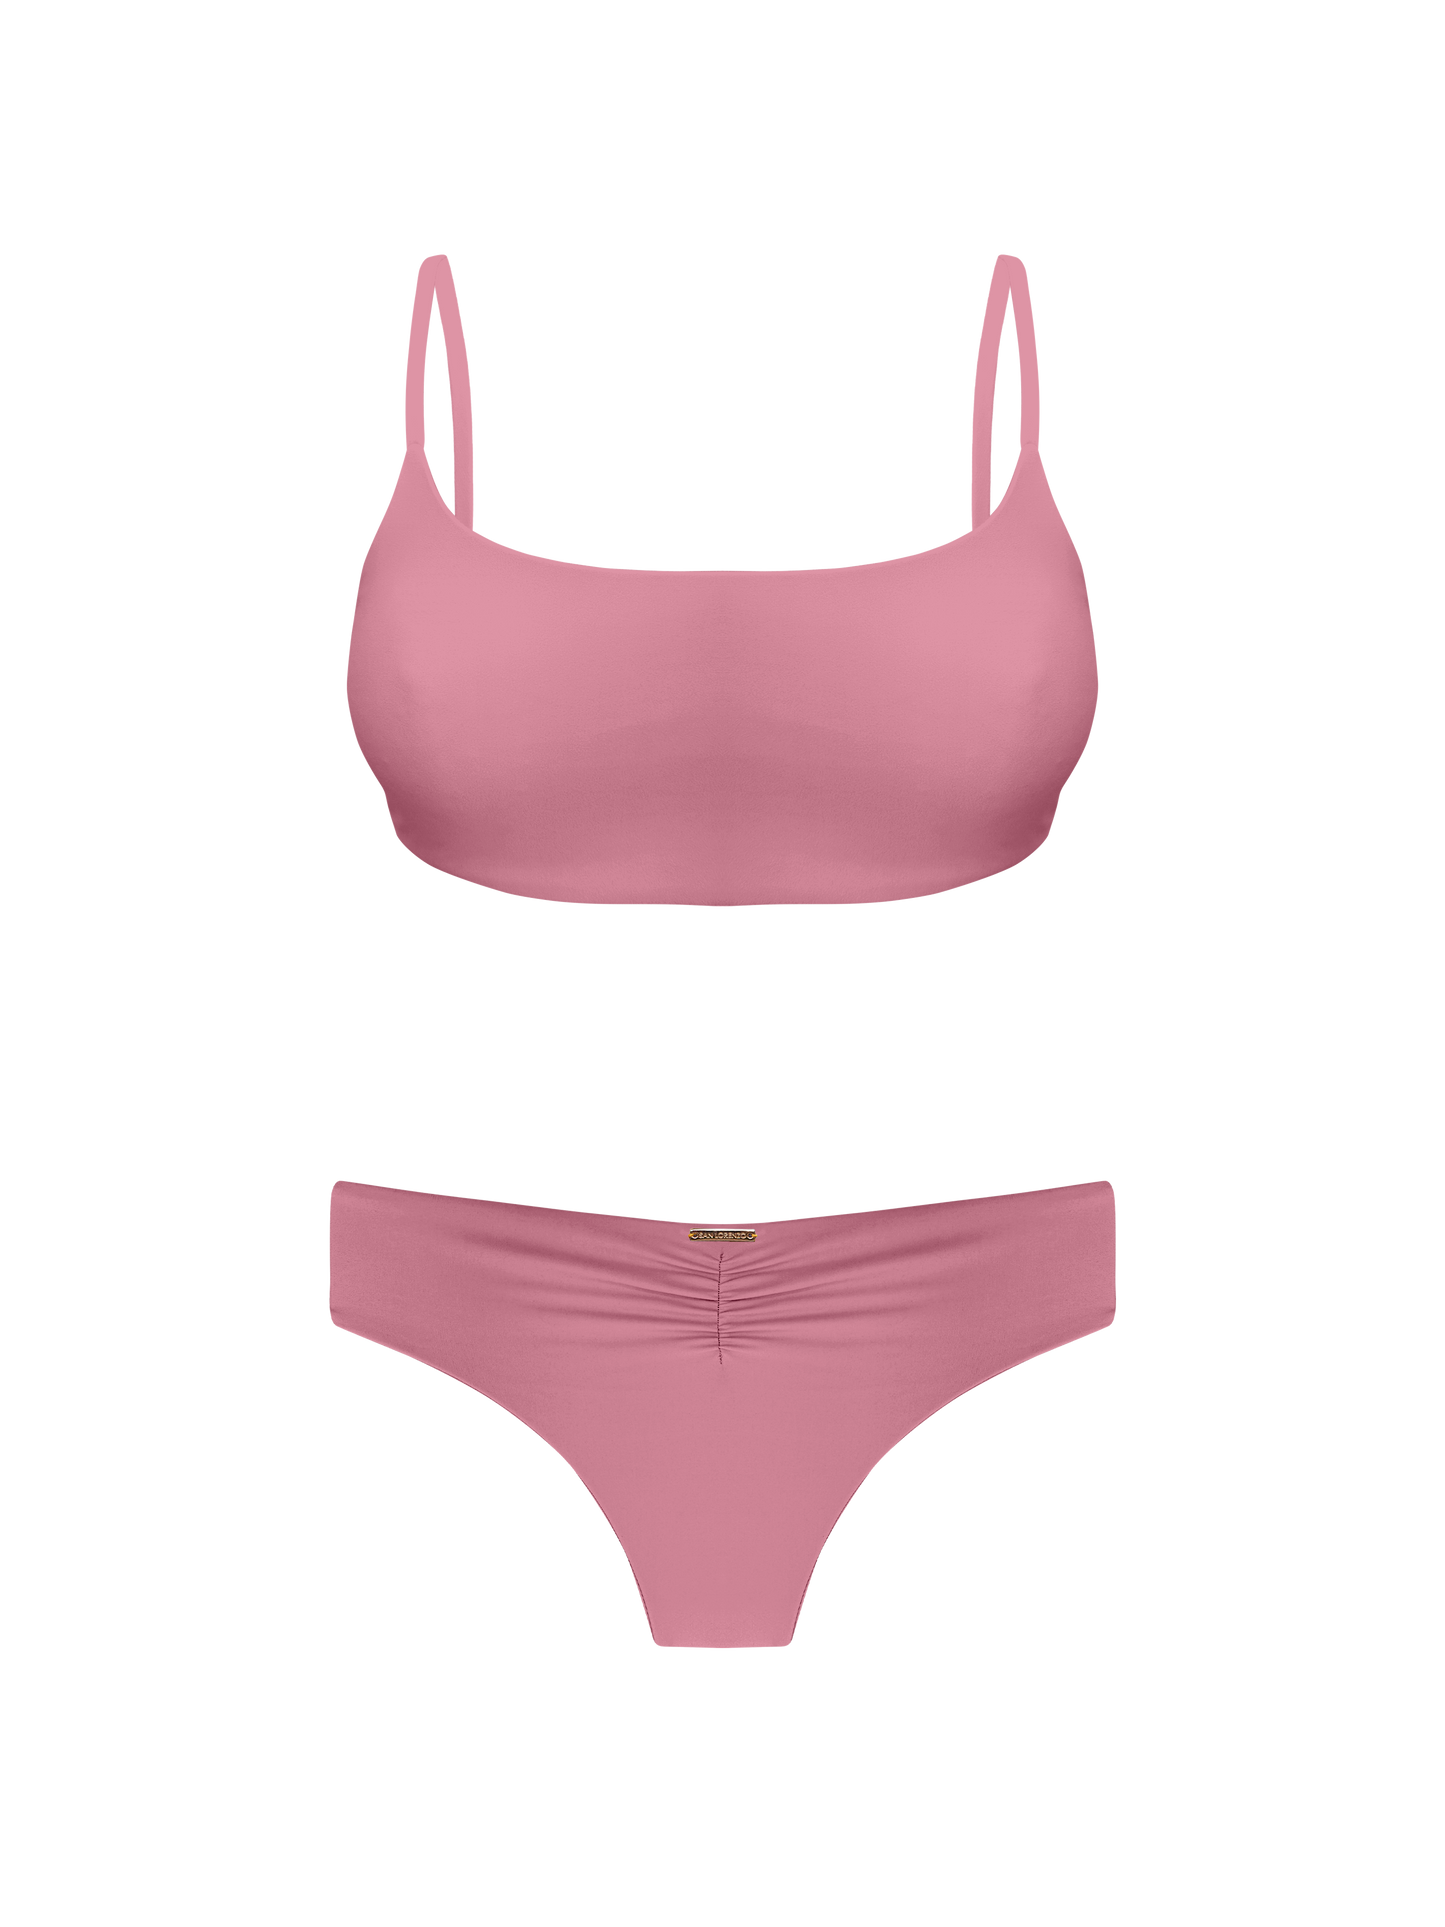 Coral Pink Sand Sport Cross Back Bikini Top